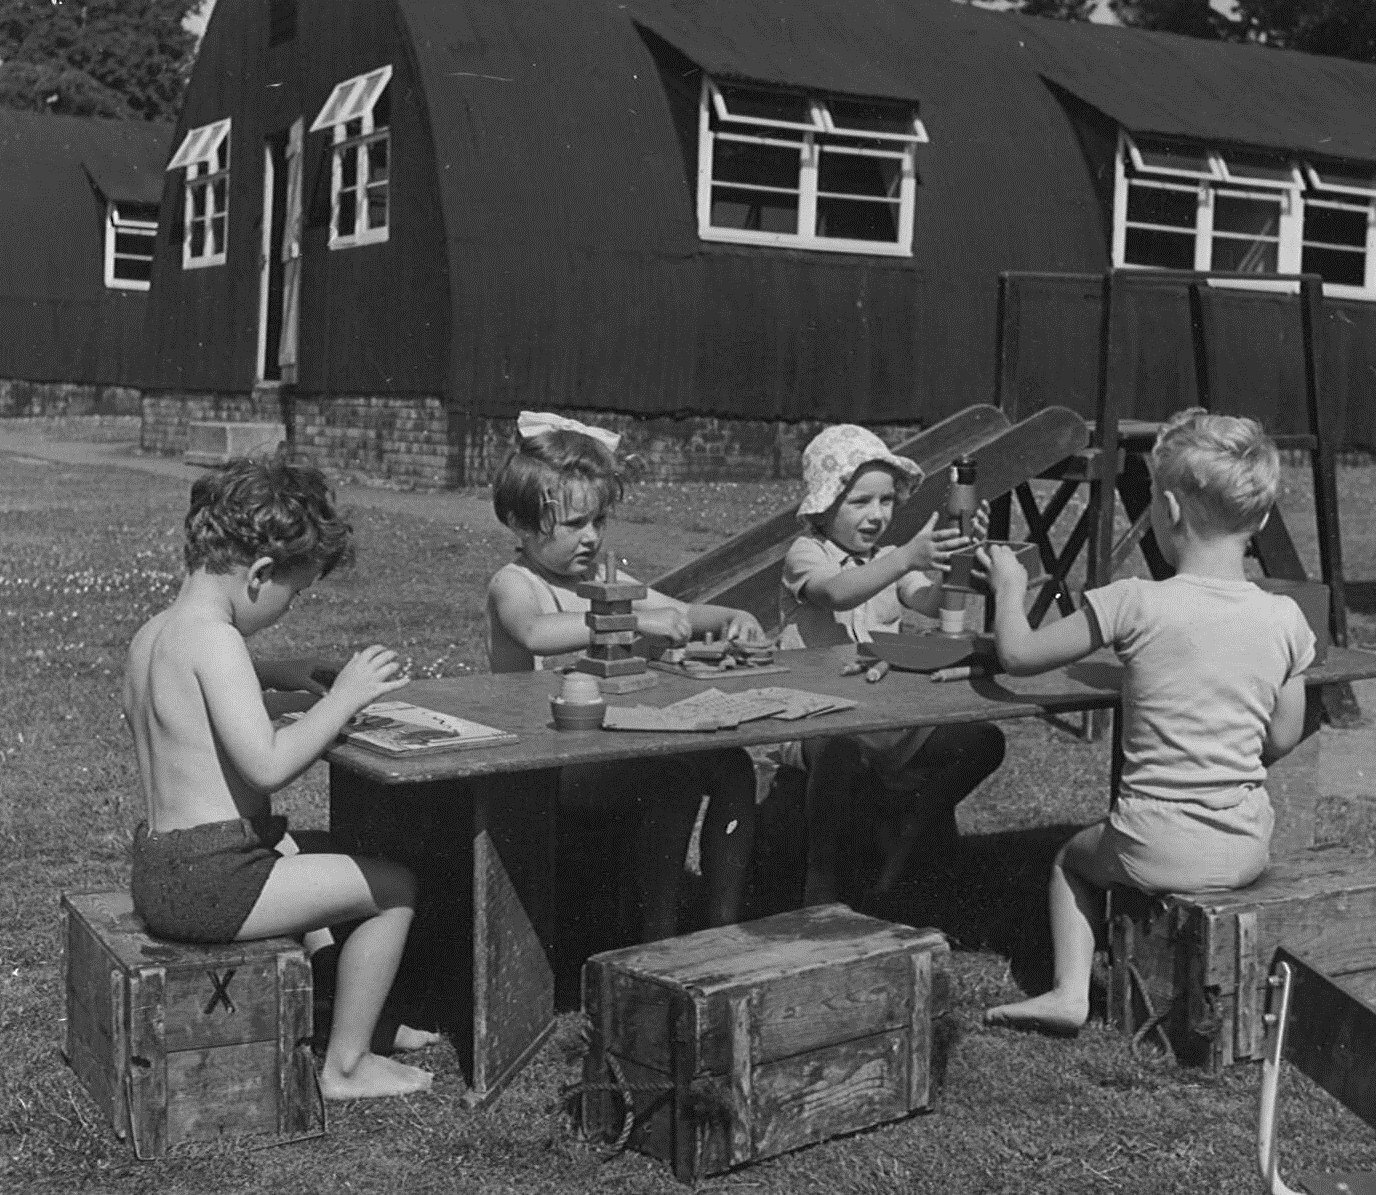 Practising school Wimbledon, circa 1950, using army Nissen huts for classrooms